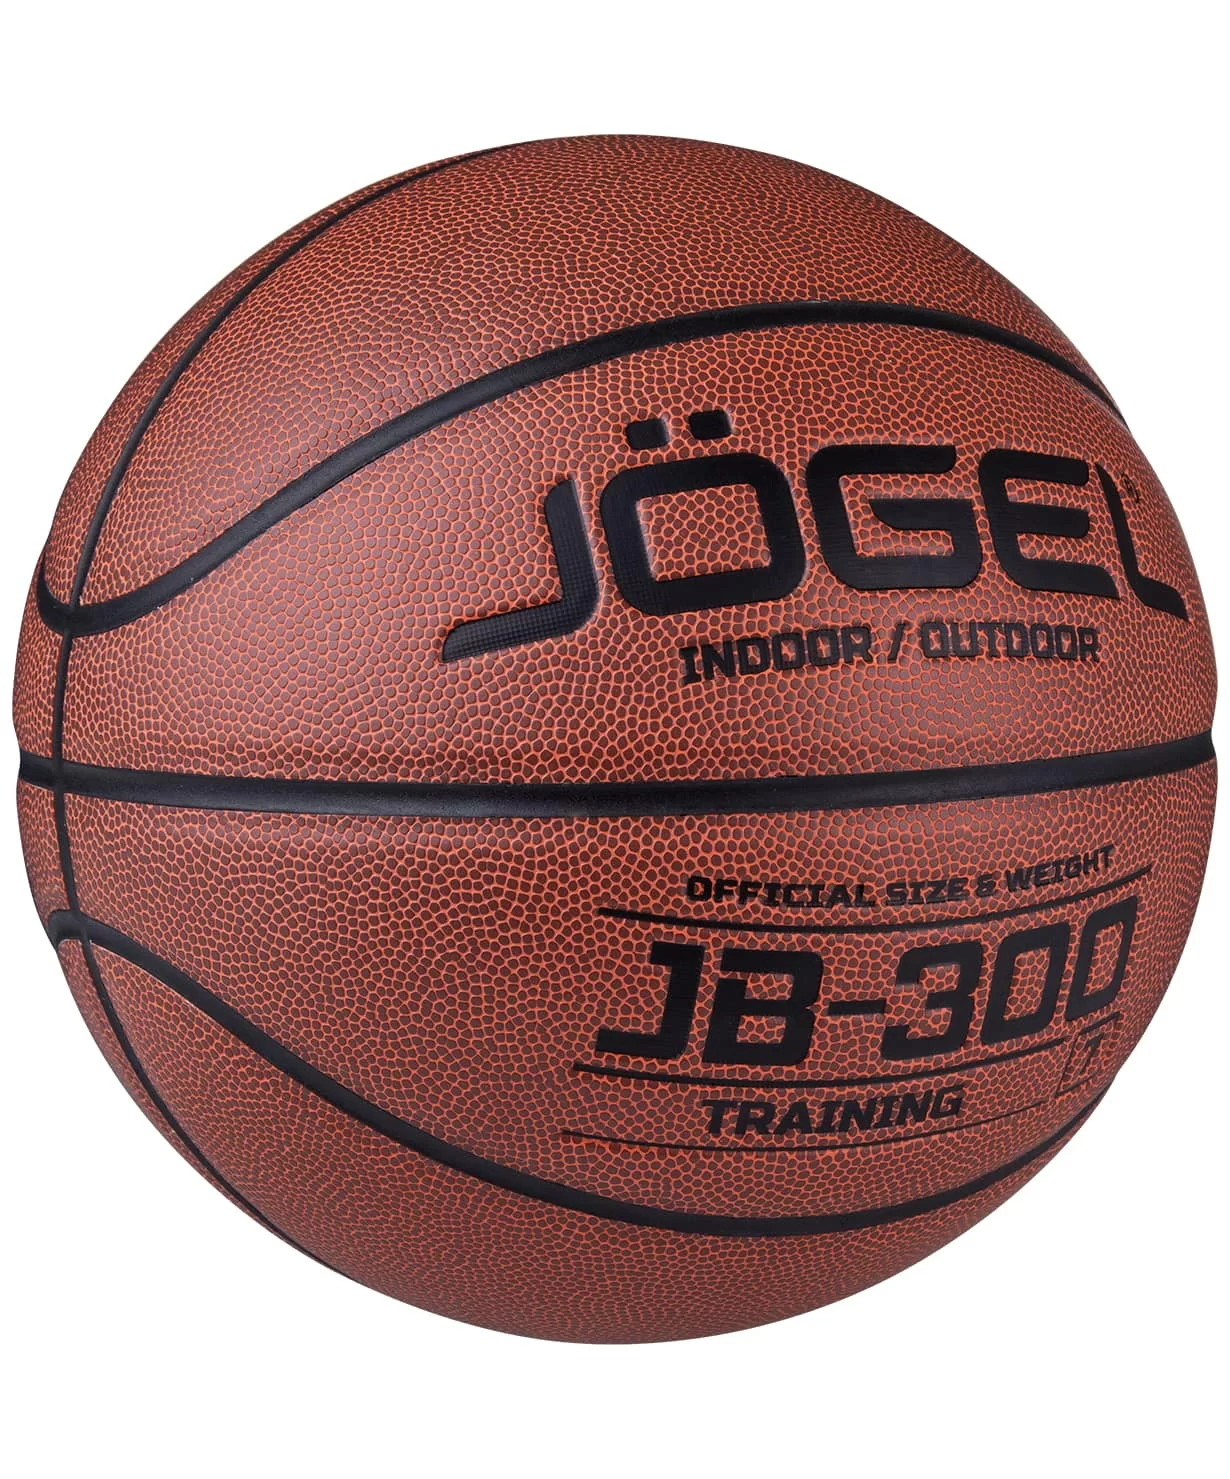 Фото Мяч баскетбольный Jogel JB-300 размер №7 18770 со склада магазина СпортЕВ